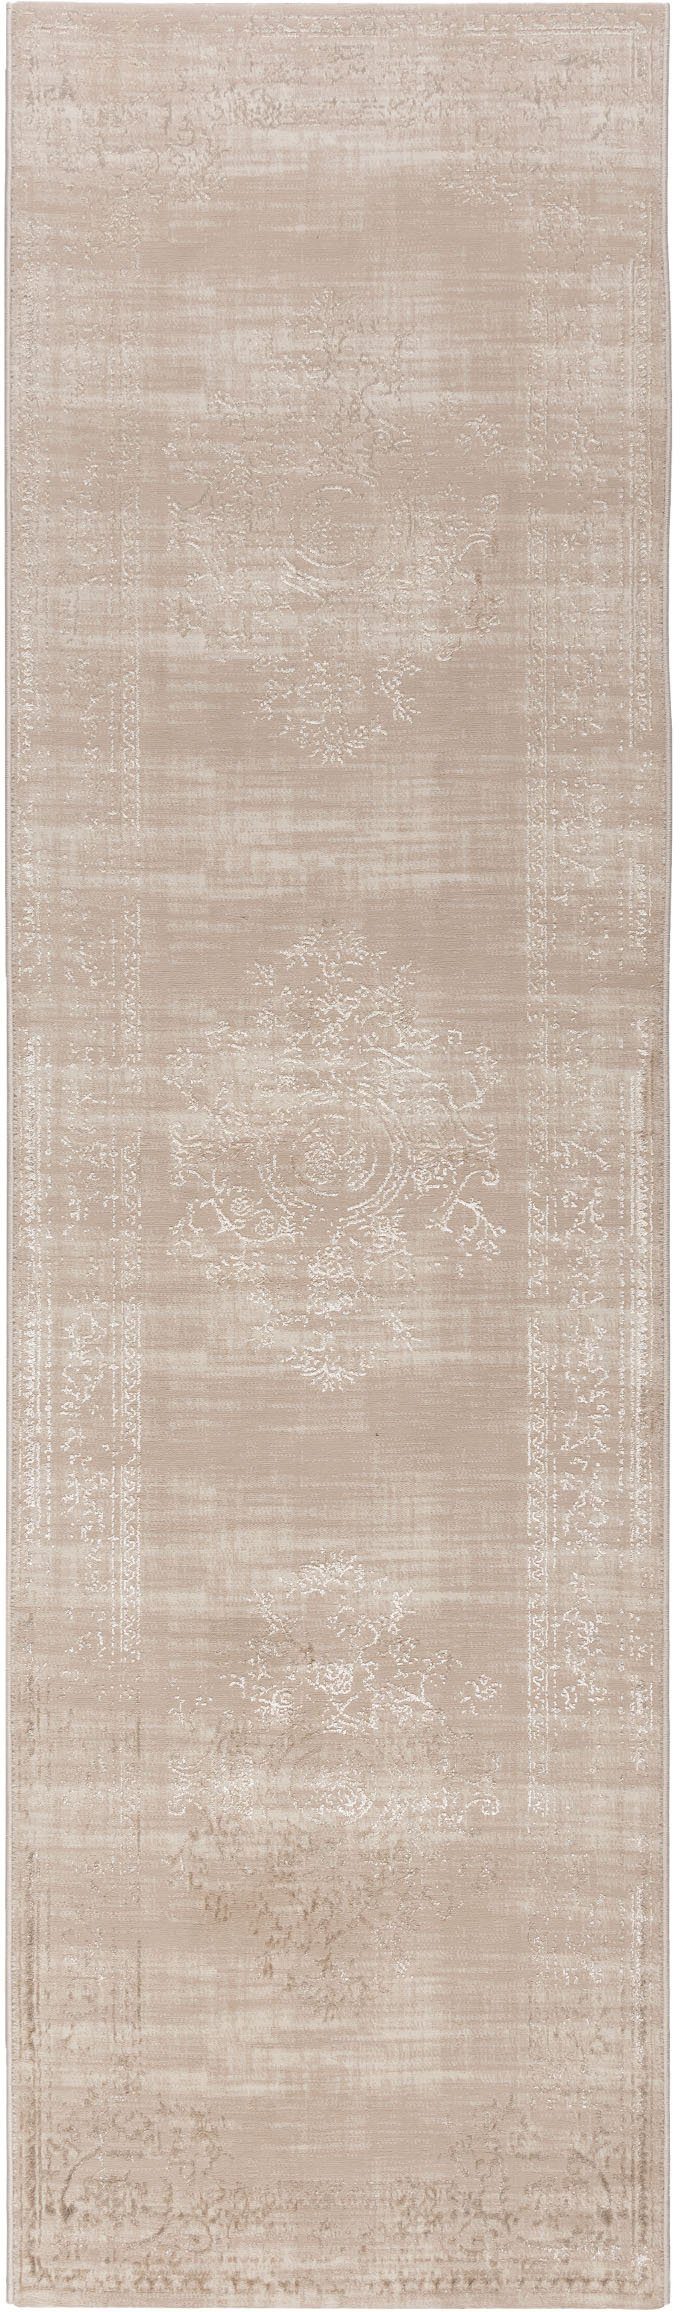 SEHRAZAT Vloerkleed- modern laagpolig vloerkleed, tapijtenloods Lara, beige geodriehoek patroon, 80x300 cm